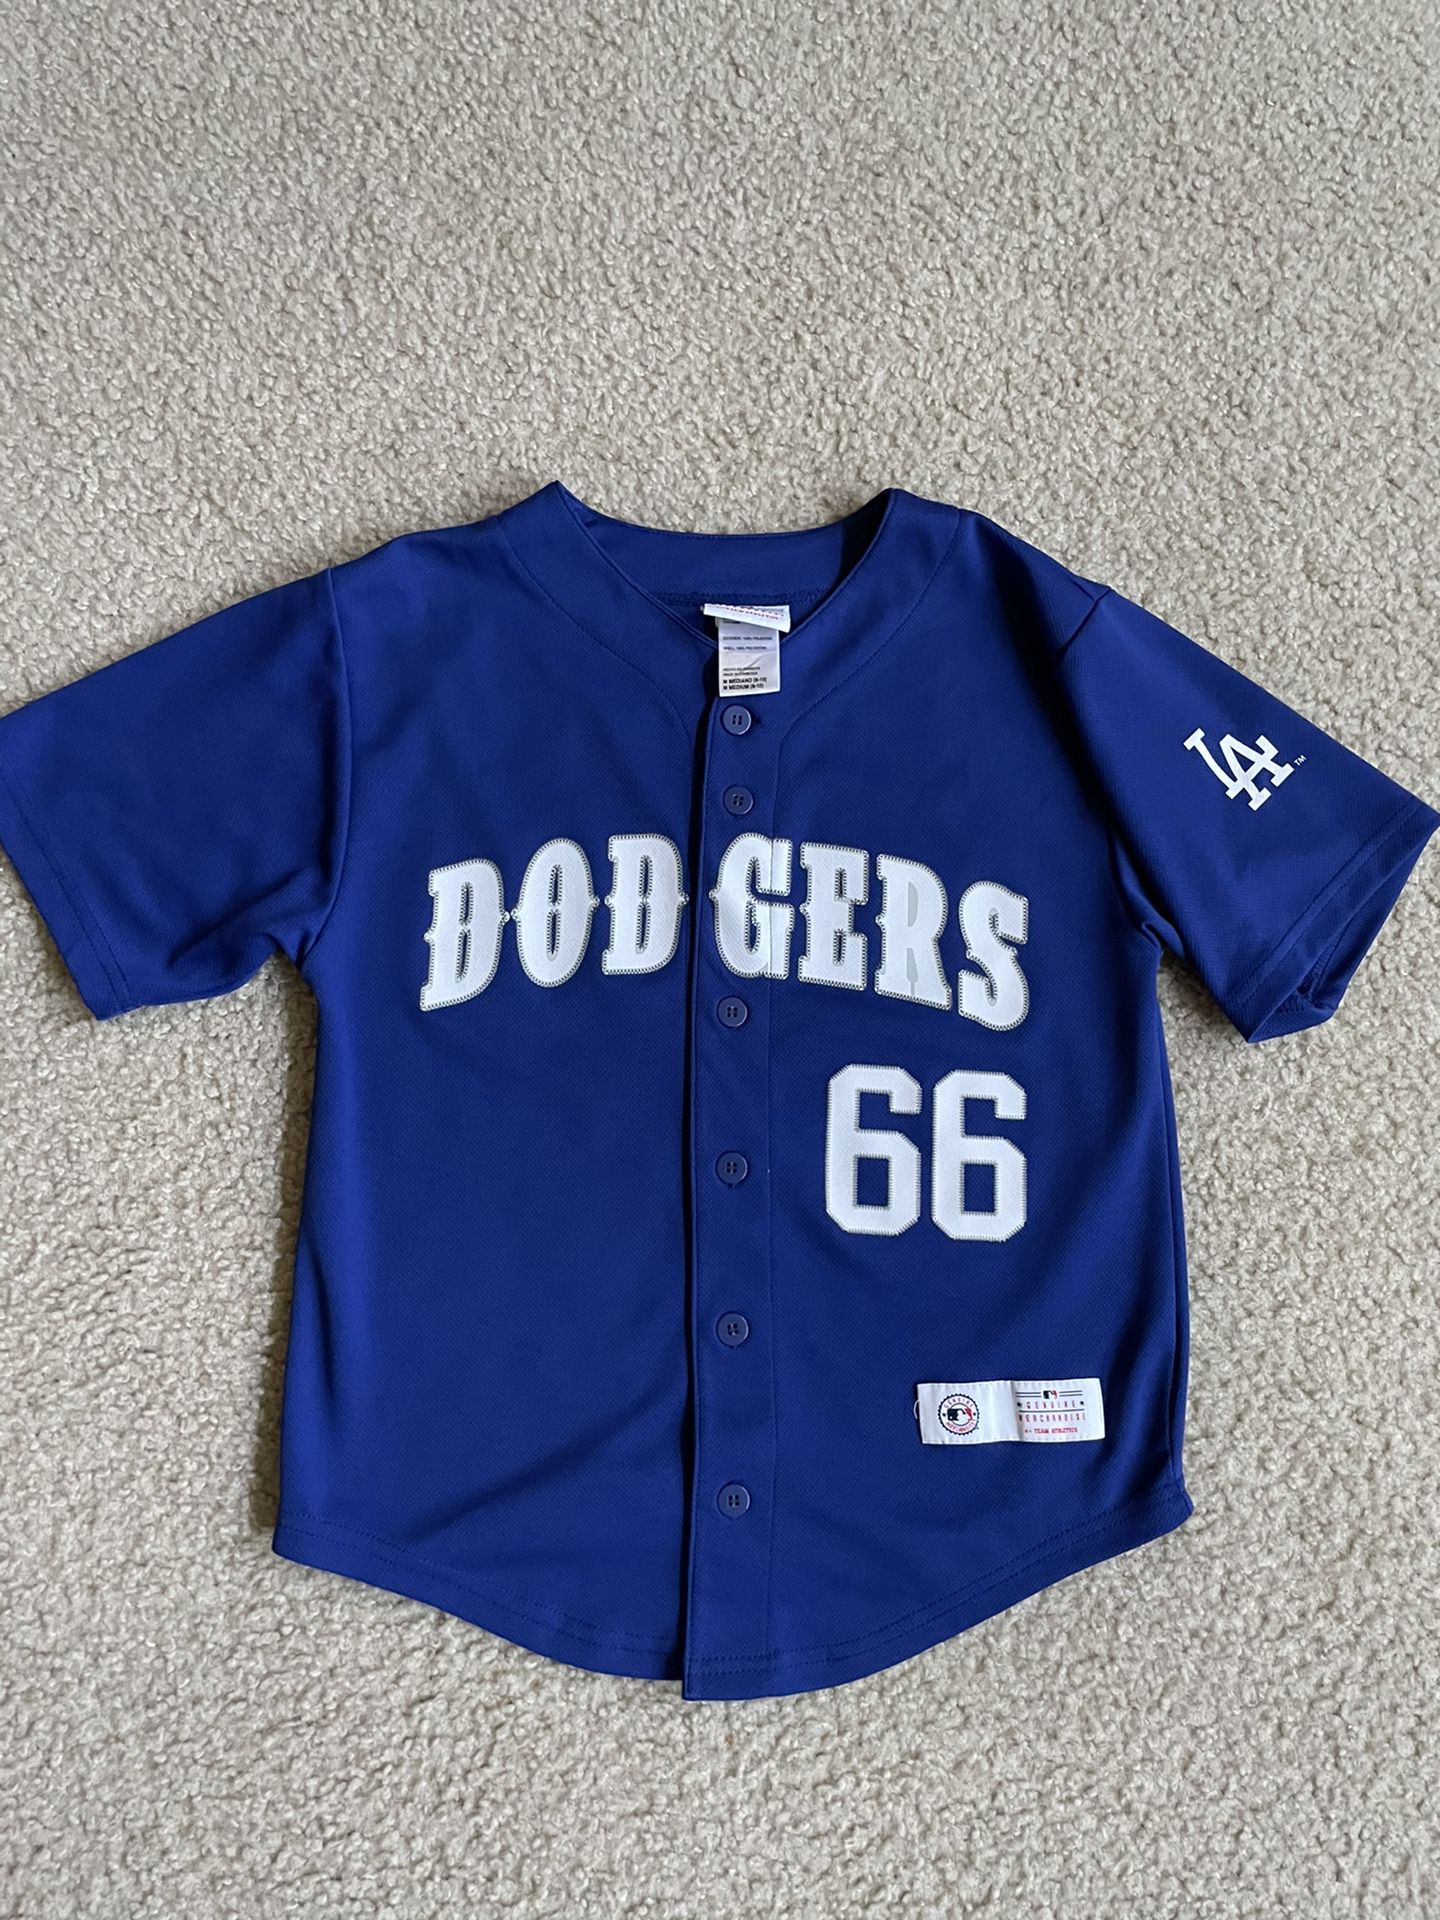 Dodgers Kids Size Jersey Puig Size 10